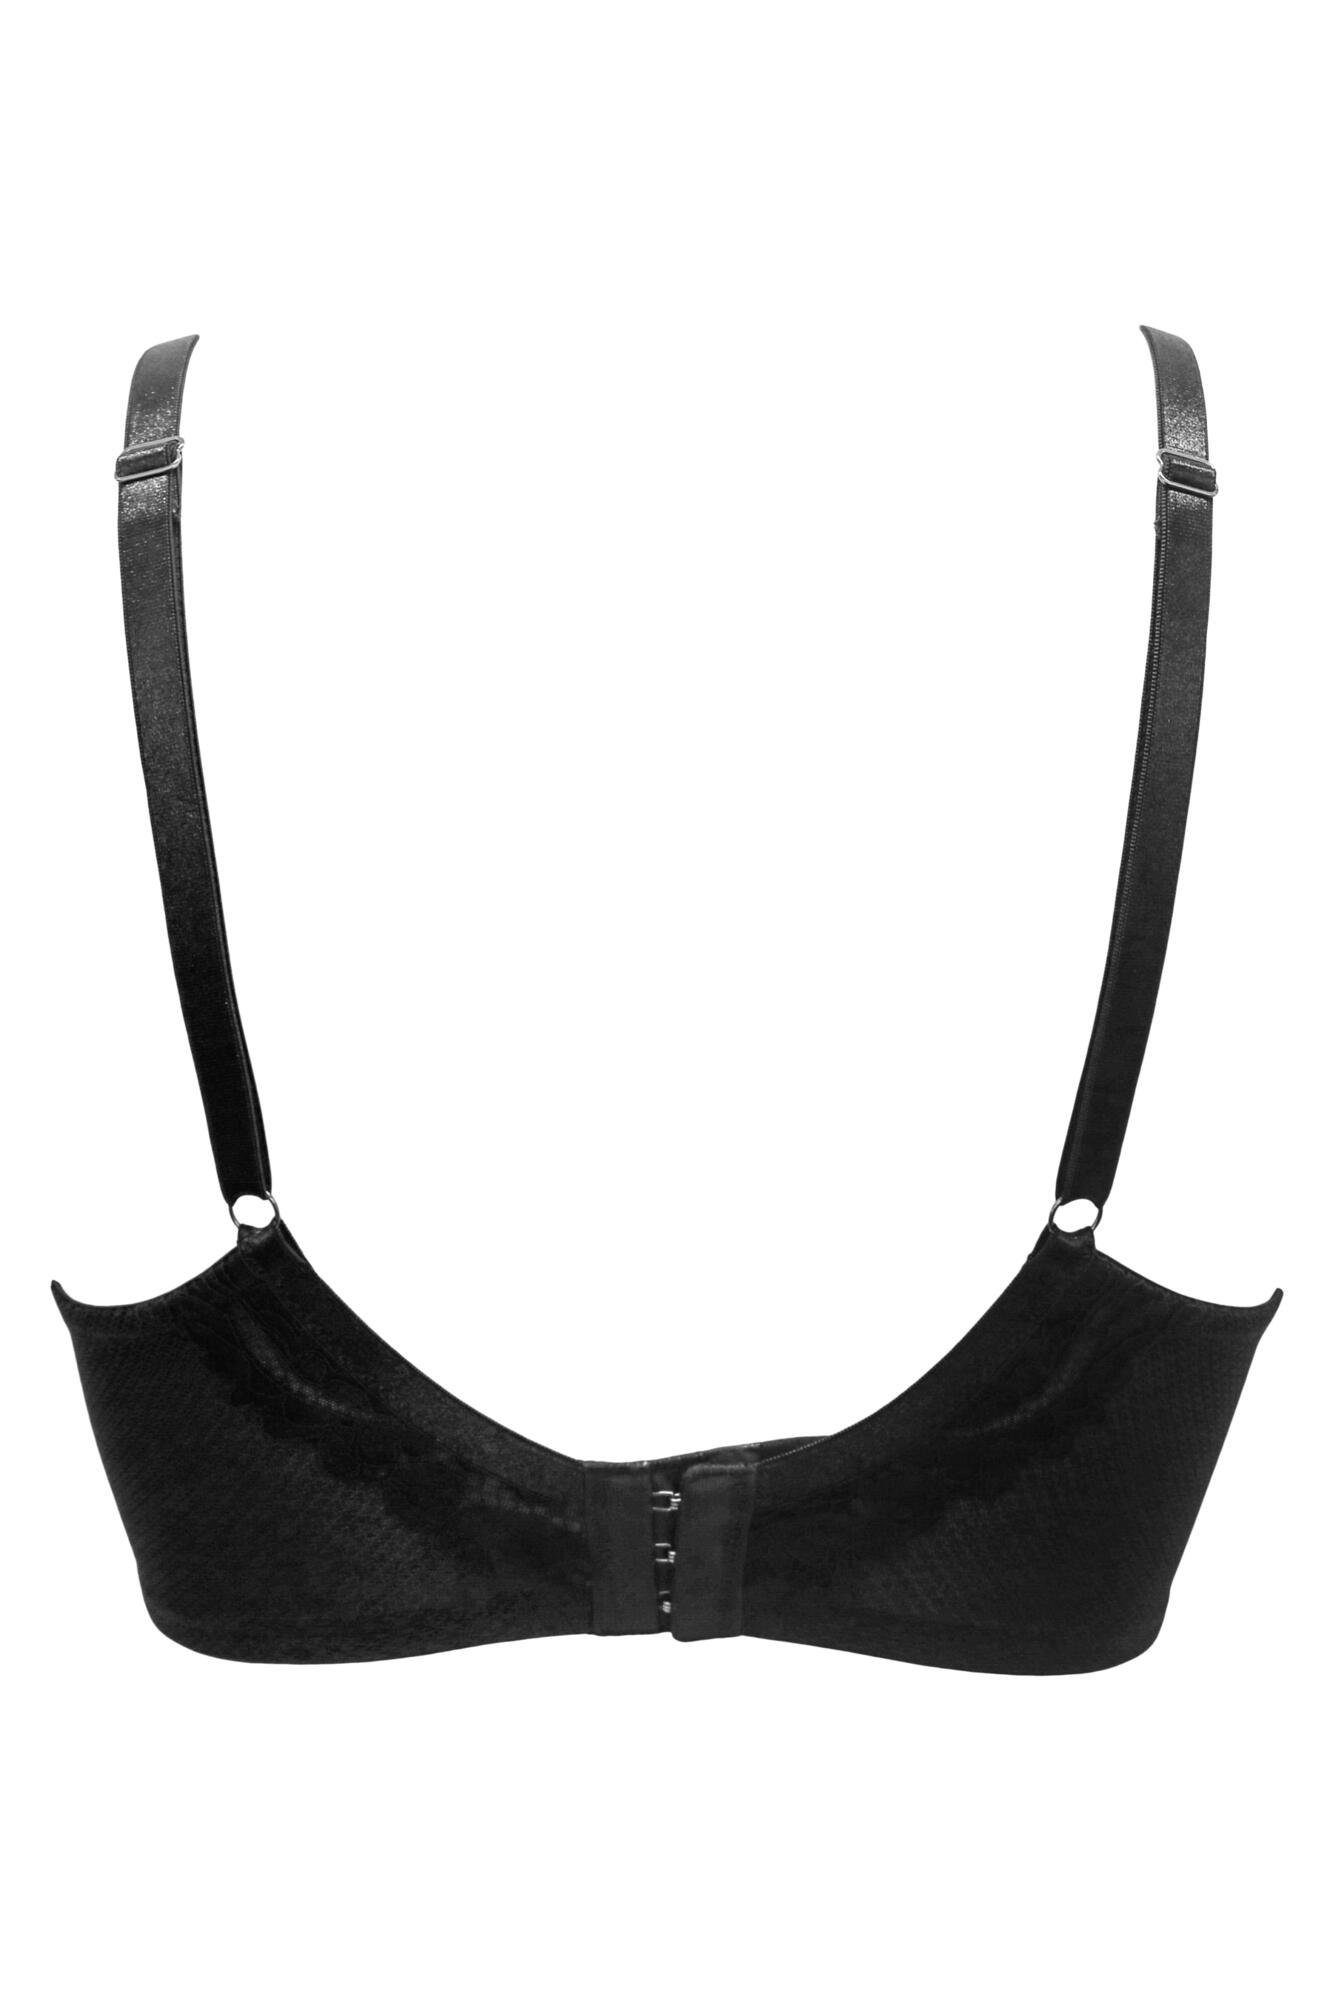 New Look longline push up bra in black